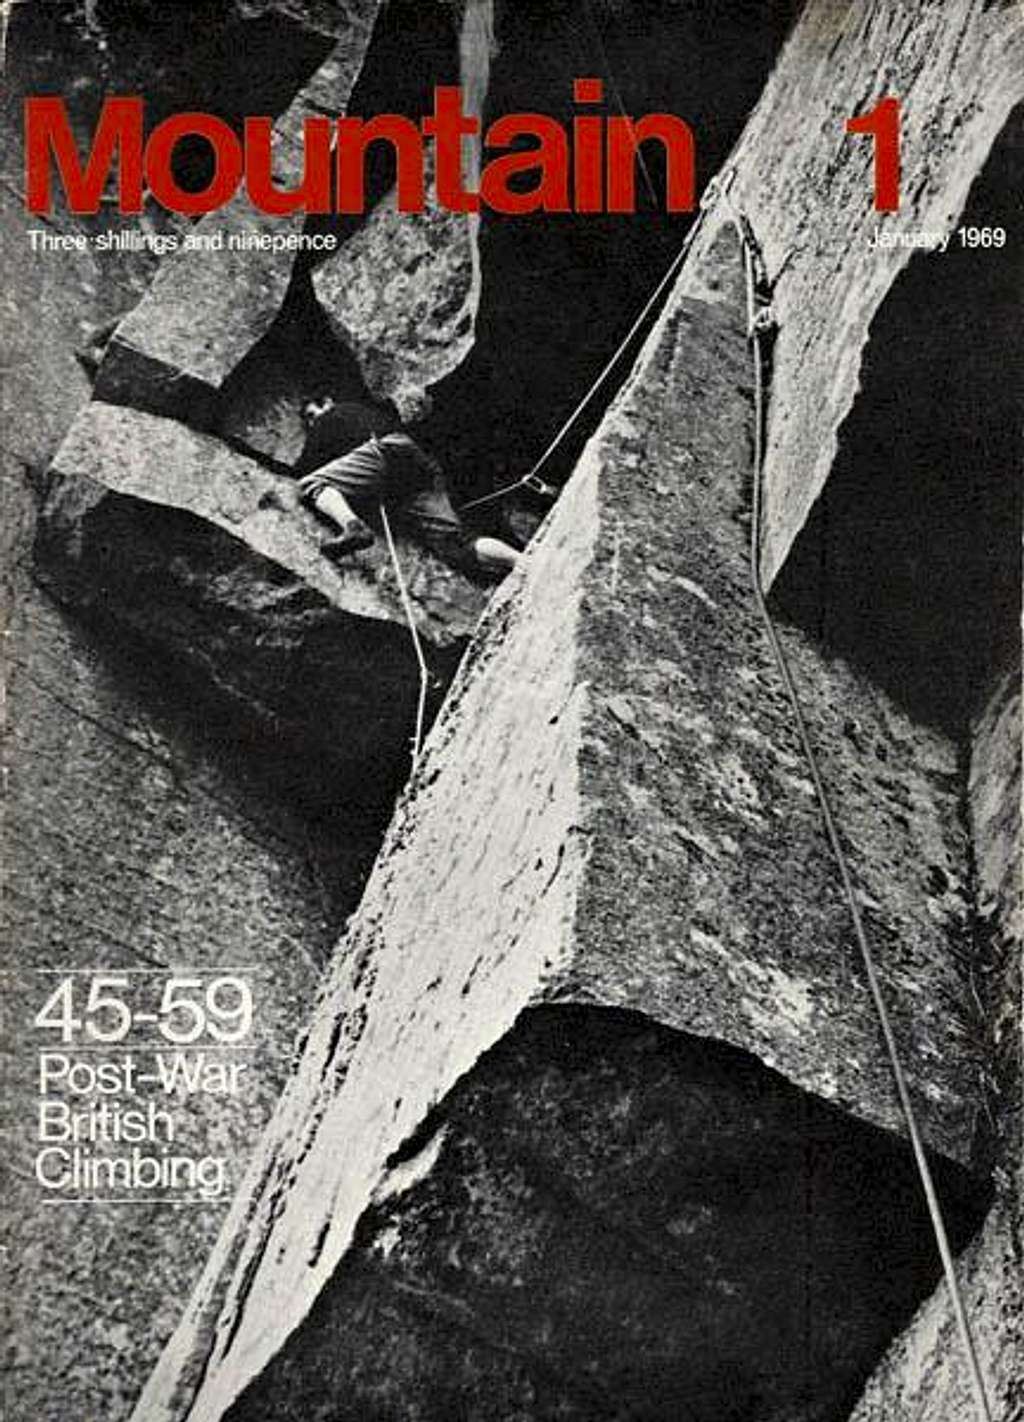 Mountain magazine #1, January 1969